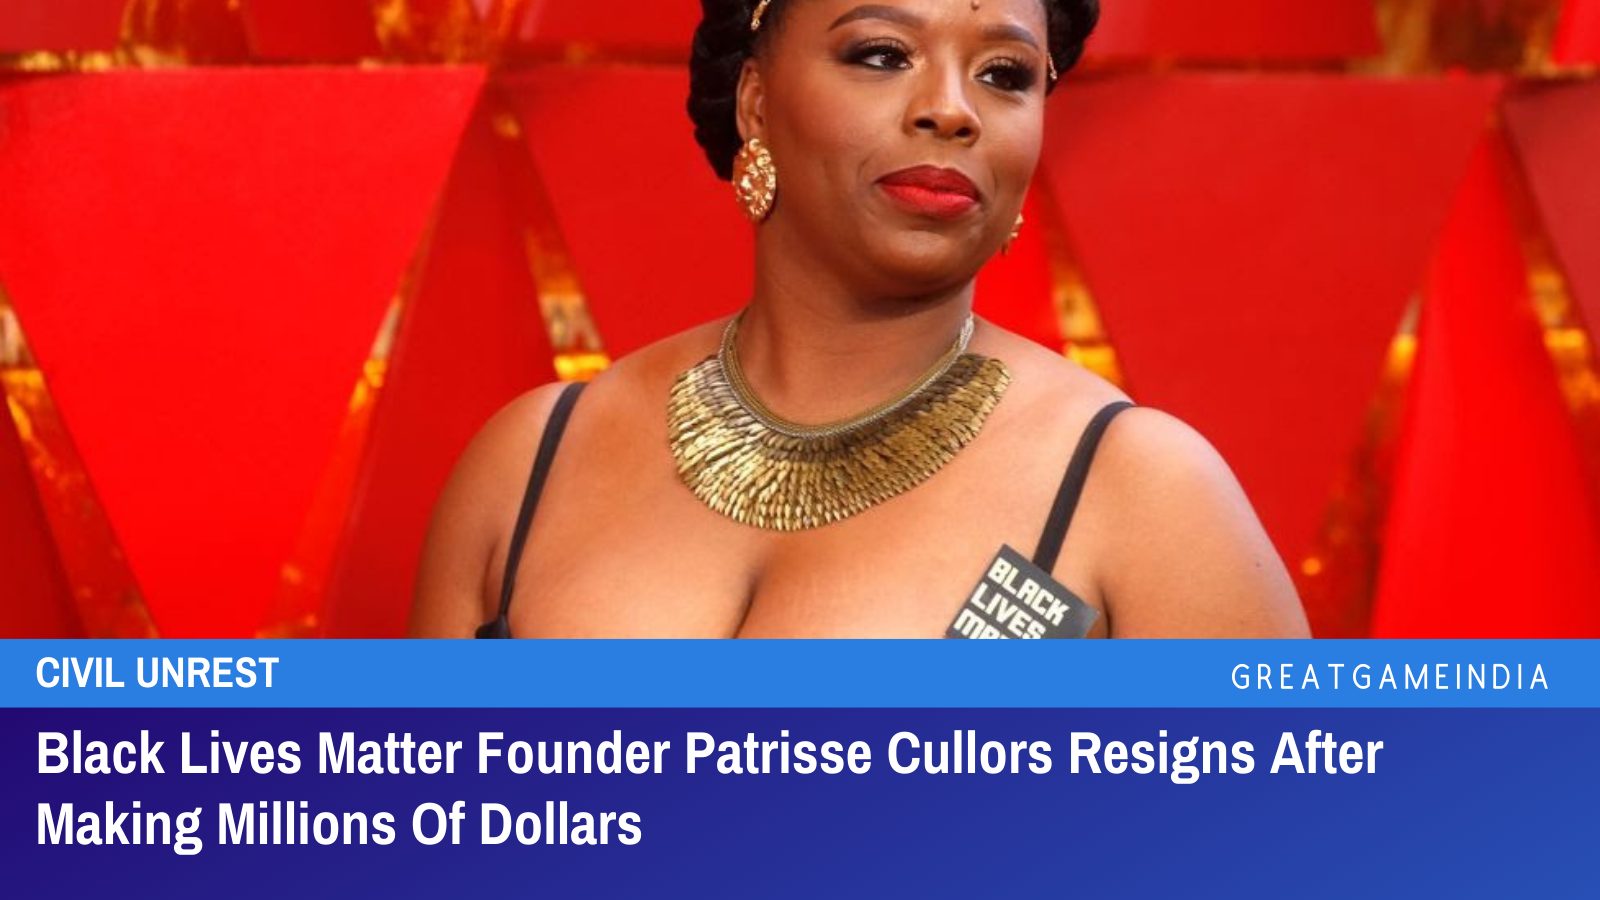 Black Lives Matter Founder Patrisse Cullors Resigns After Making Millions Of Dollars